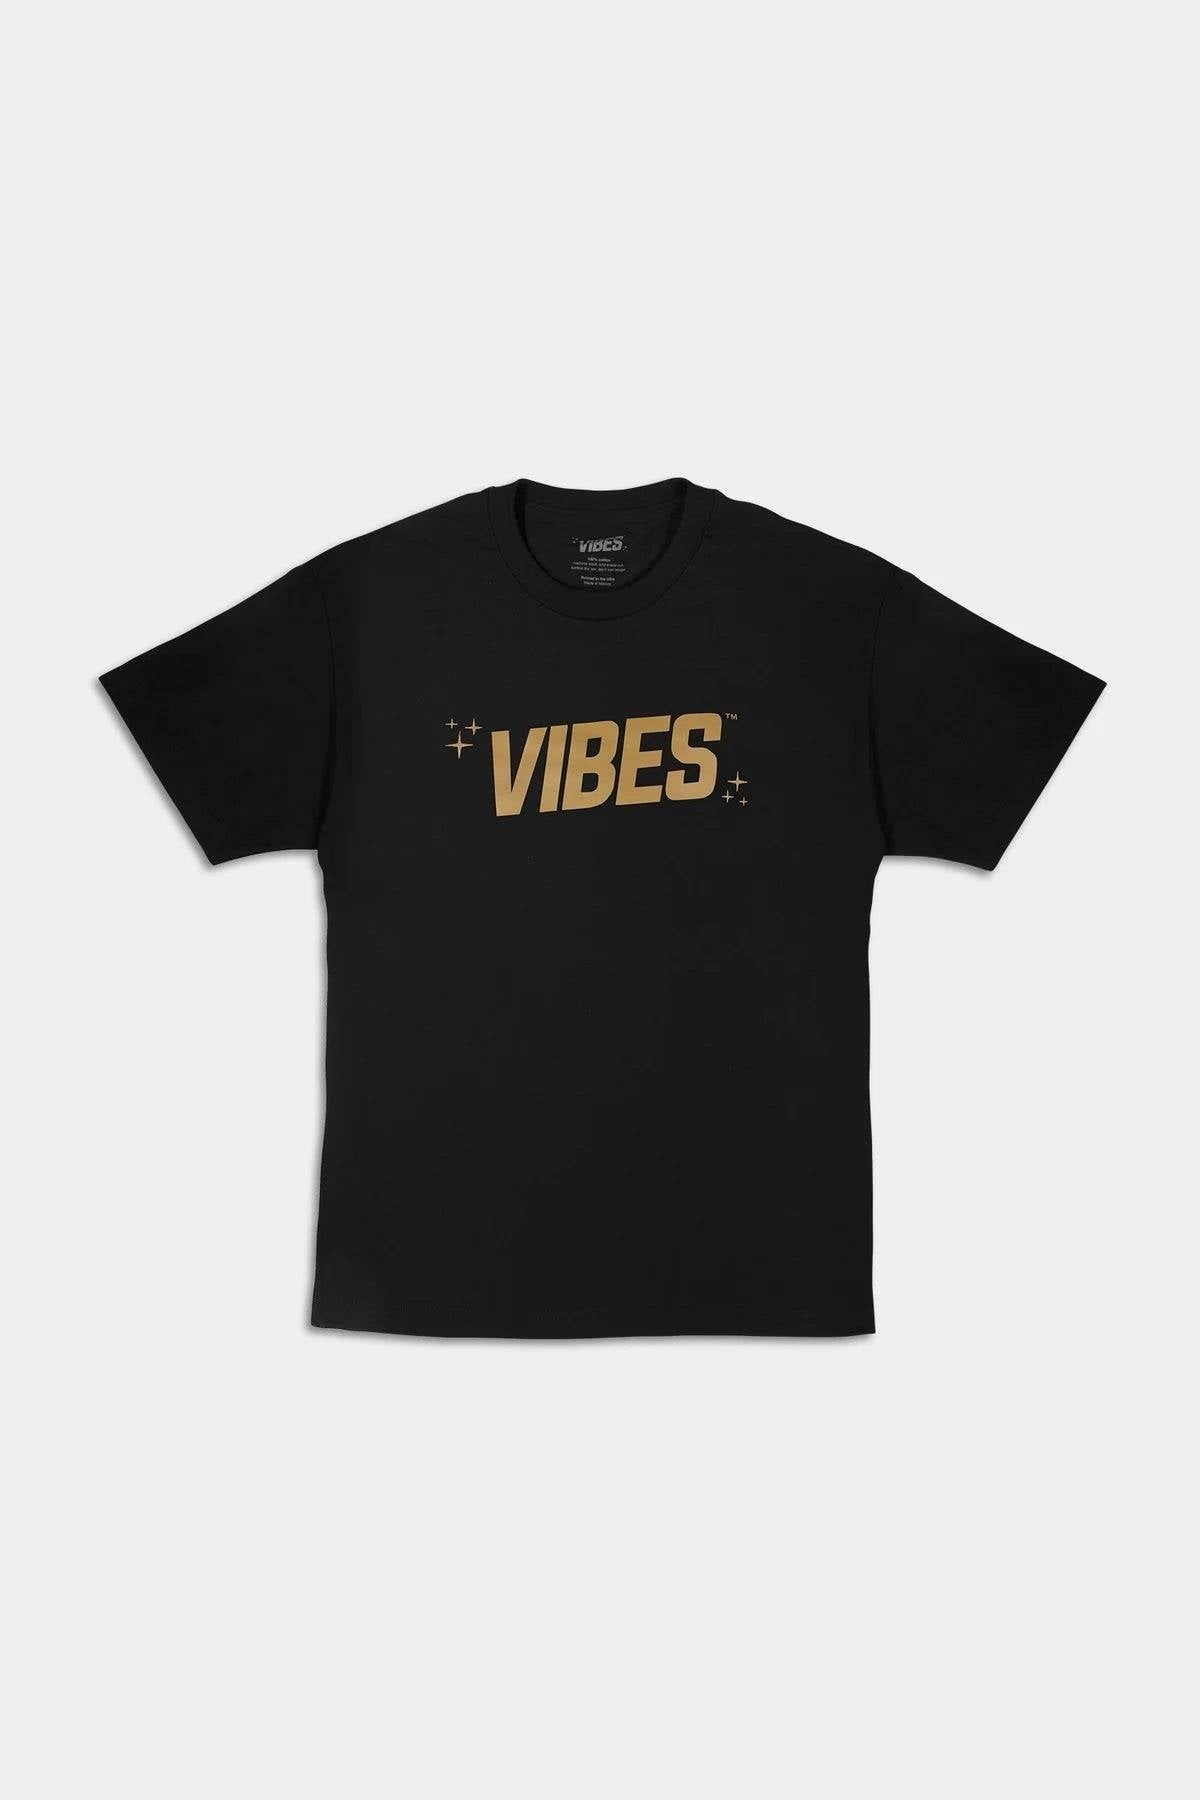 VIBES Black With Gold Logo T-Shirt Medium